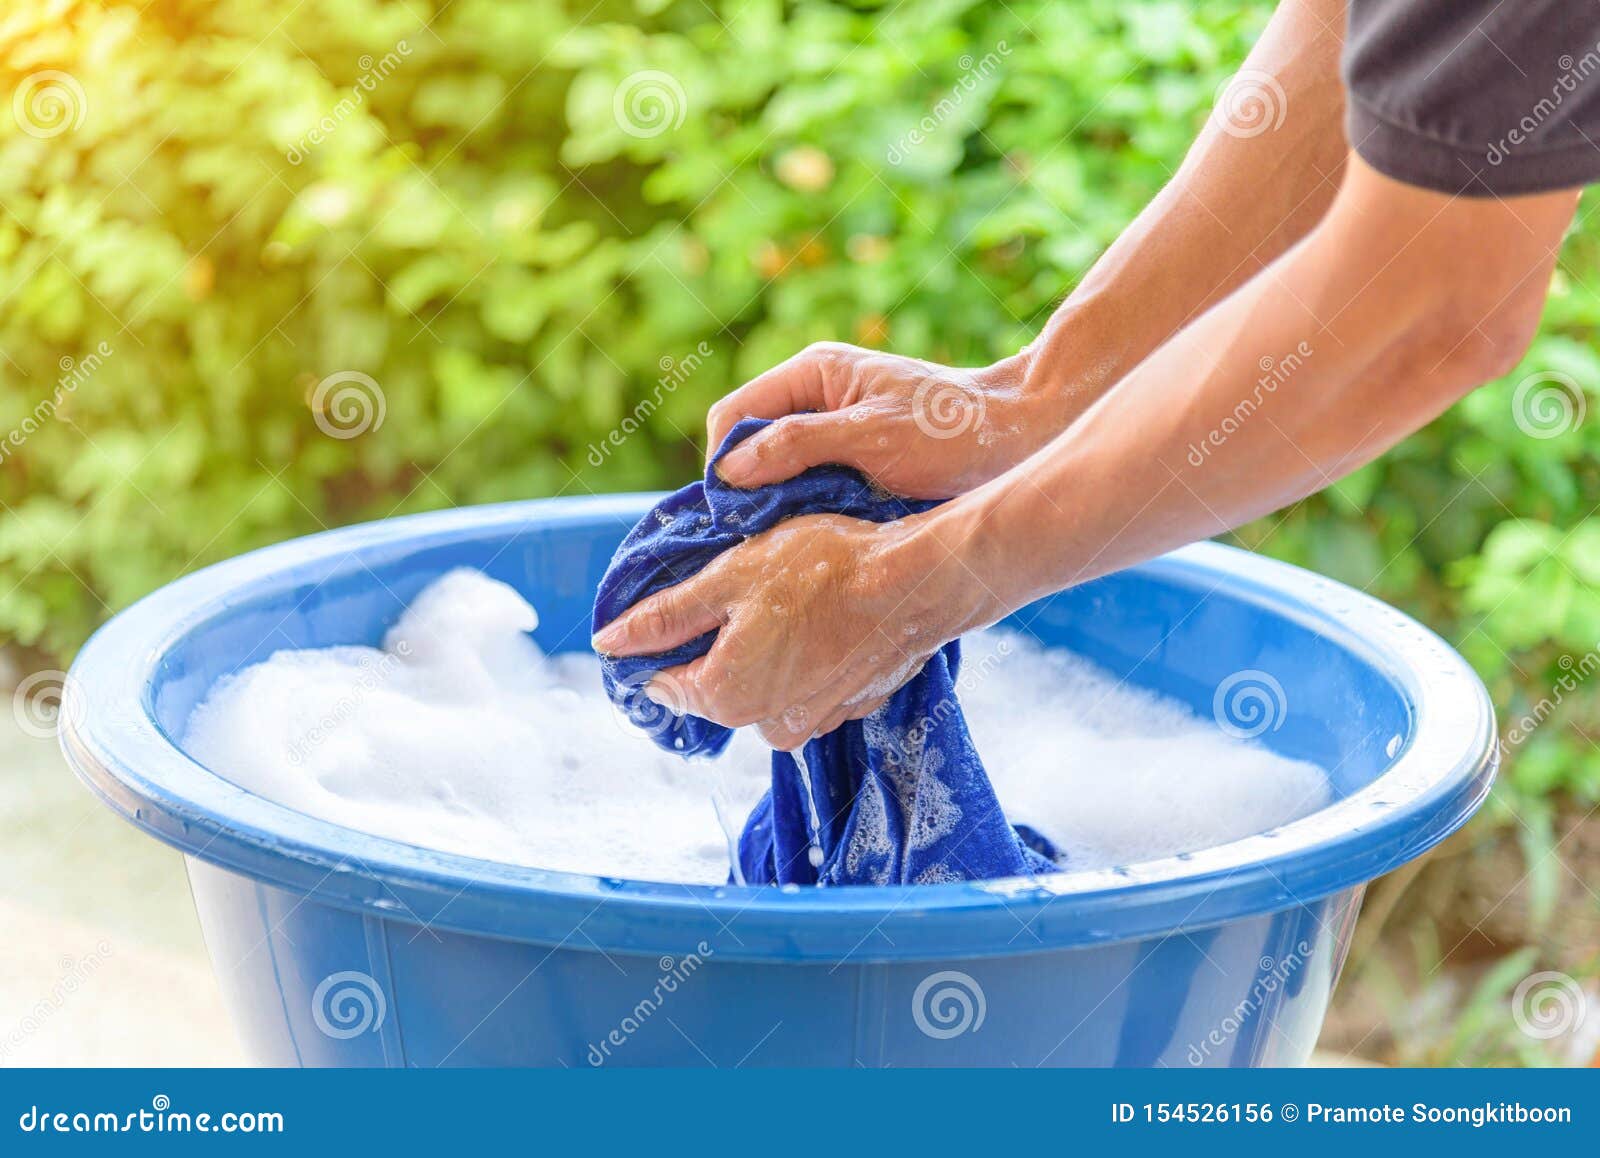 https://thumbs.dreamstime.com/z/hand-washing-clothes-blue-basin-hand-washing-clothes-blue-basin-sunlight-154526156.jpg